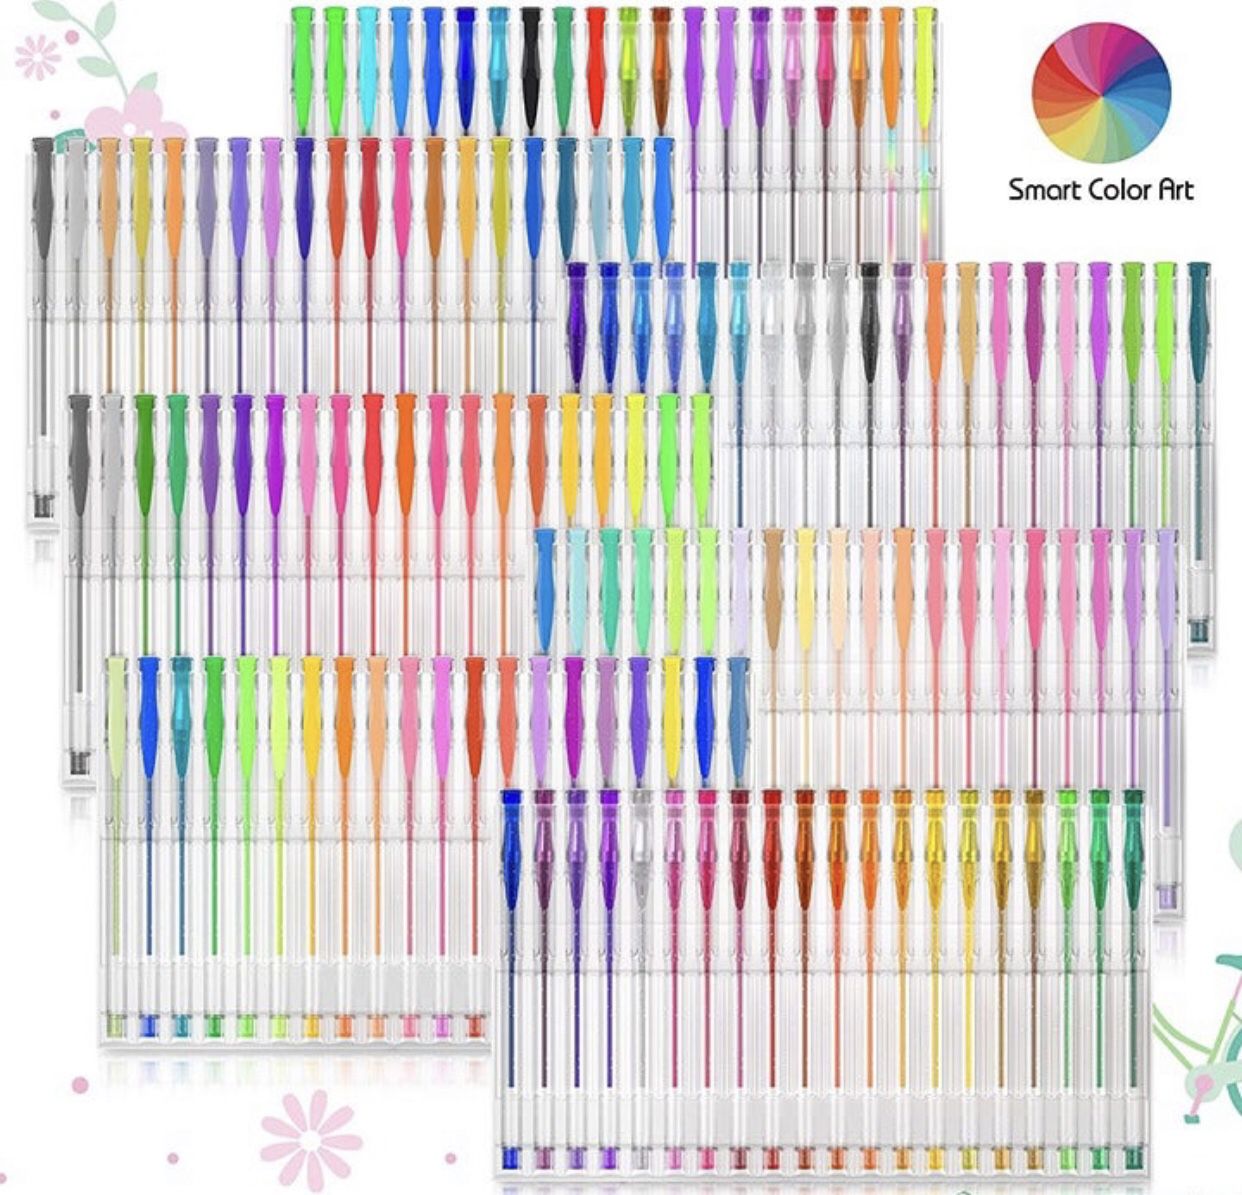 Color Art 140 Colors Gel Pens Set Gel Pen for Adult Coloring Books Drawing